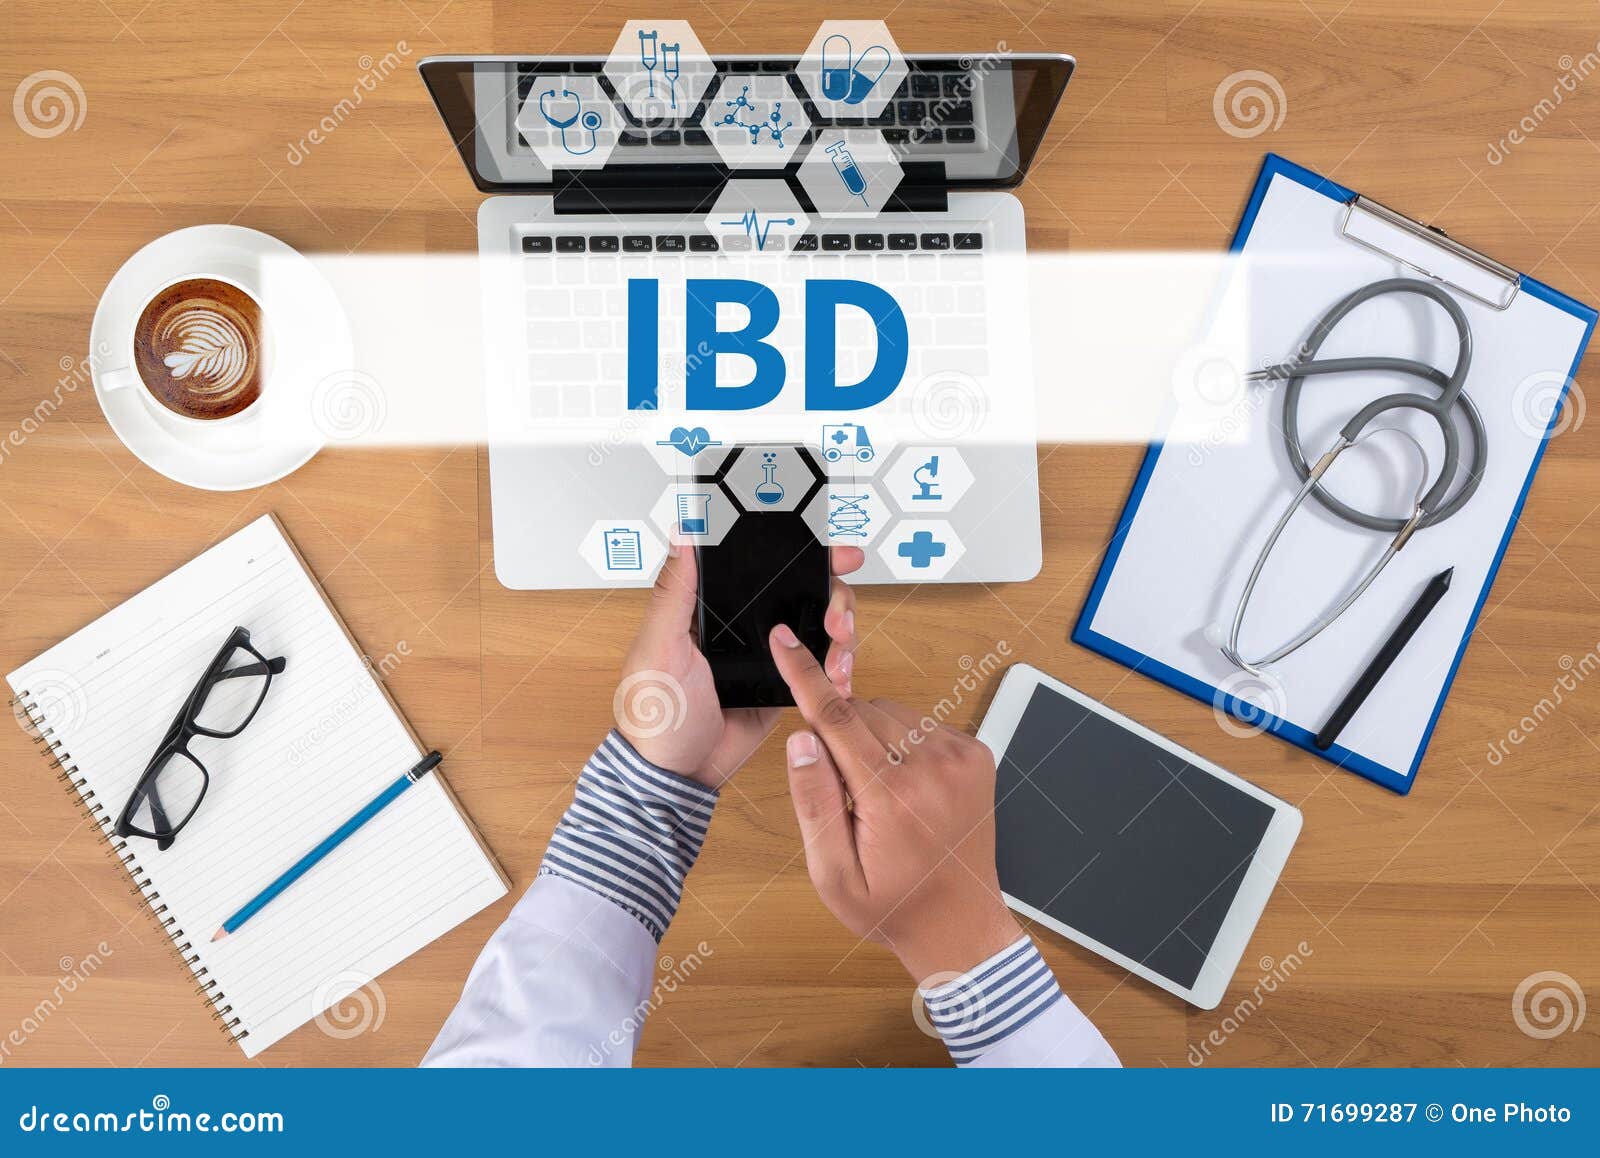 ibd - inflammatory bowel disease. medical concept